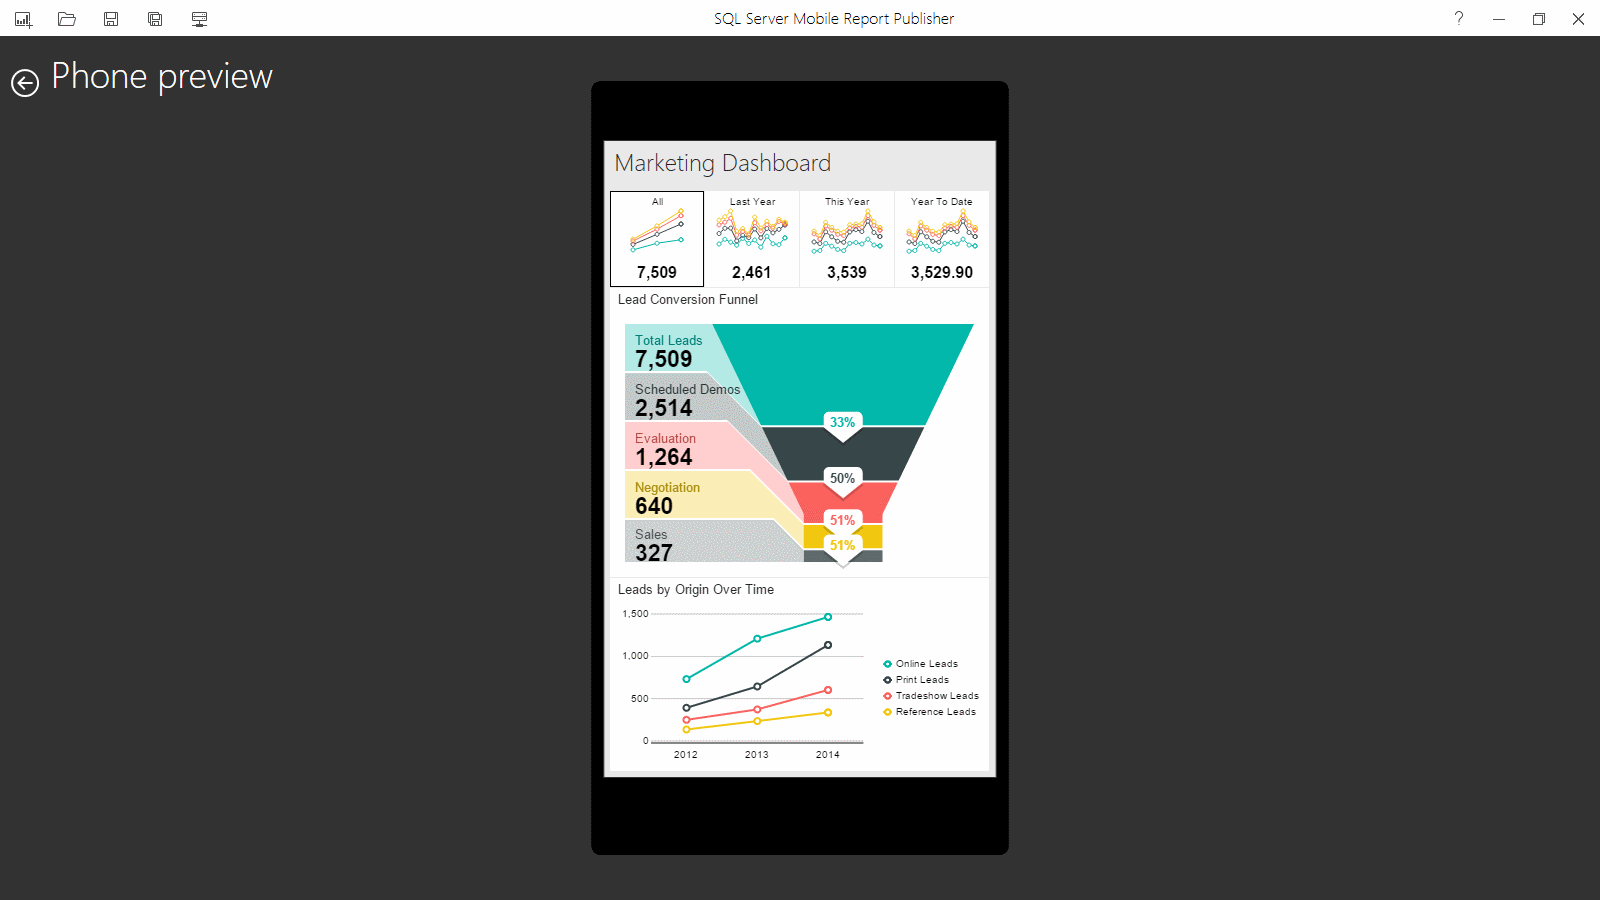 Phone View: Marketing Dashboard